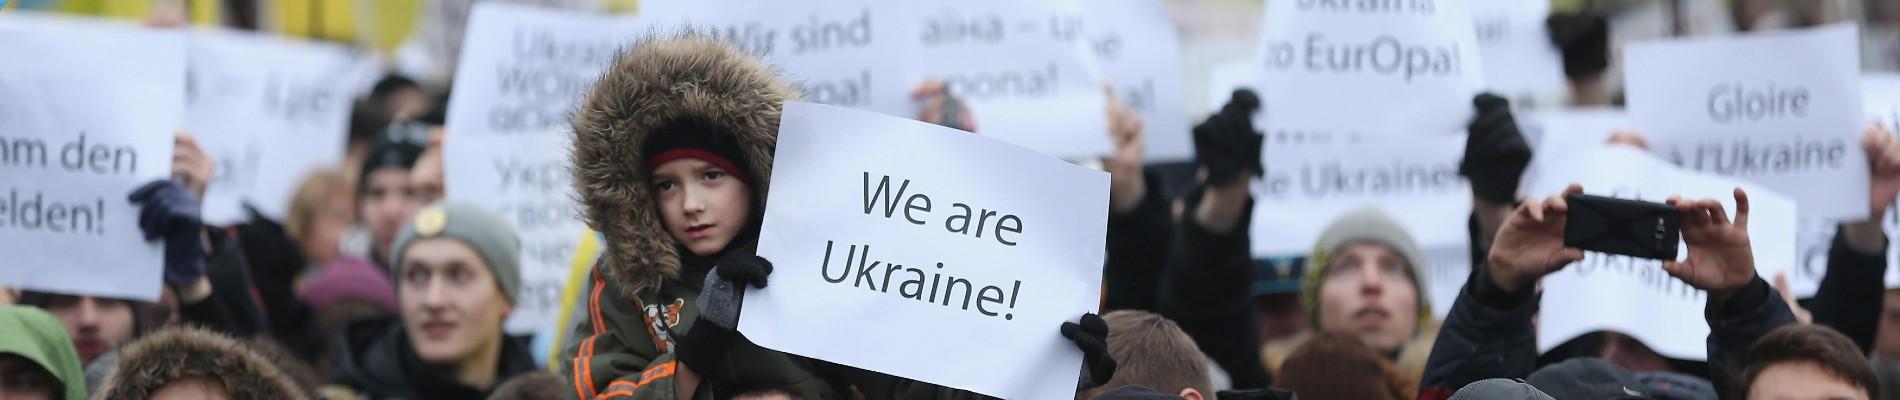 Russia’s War on Ukraine, One Year on